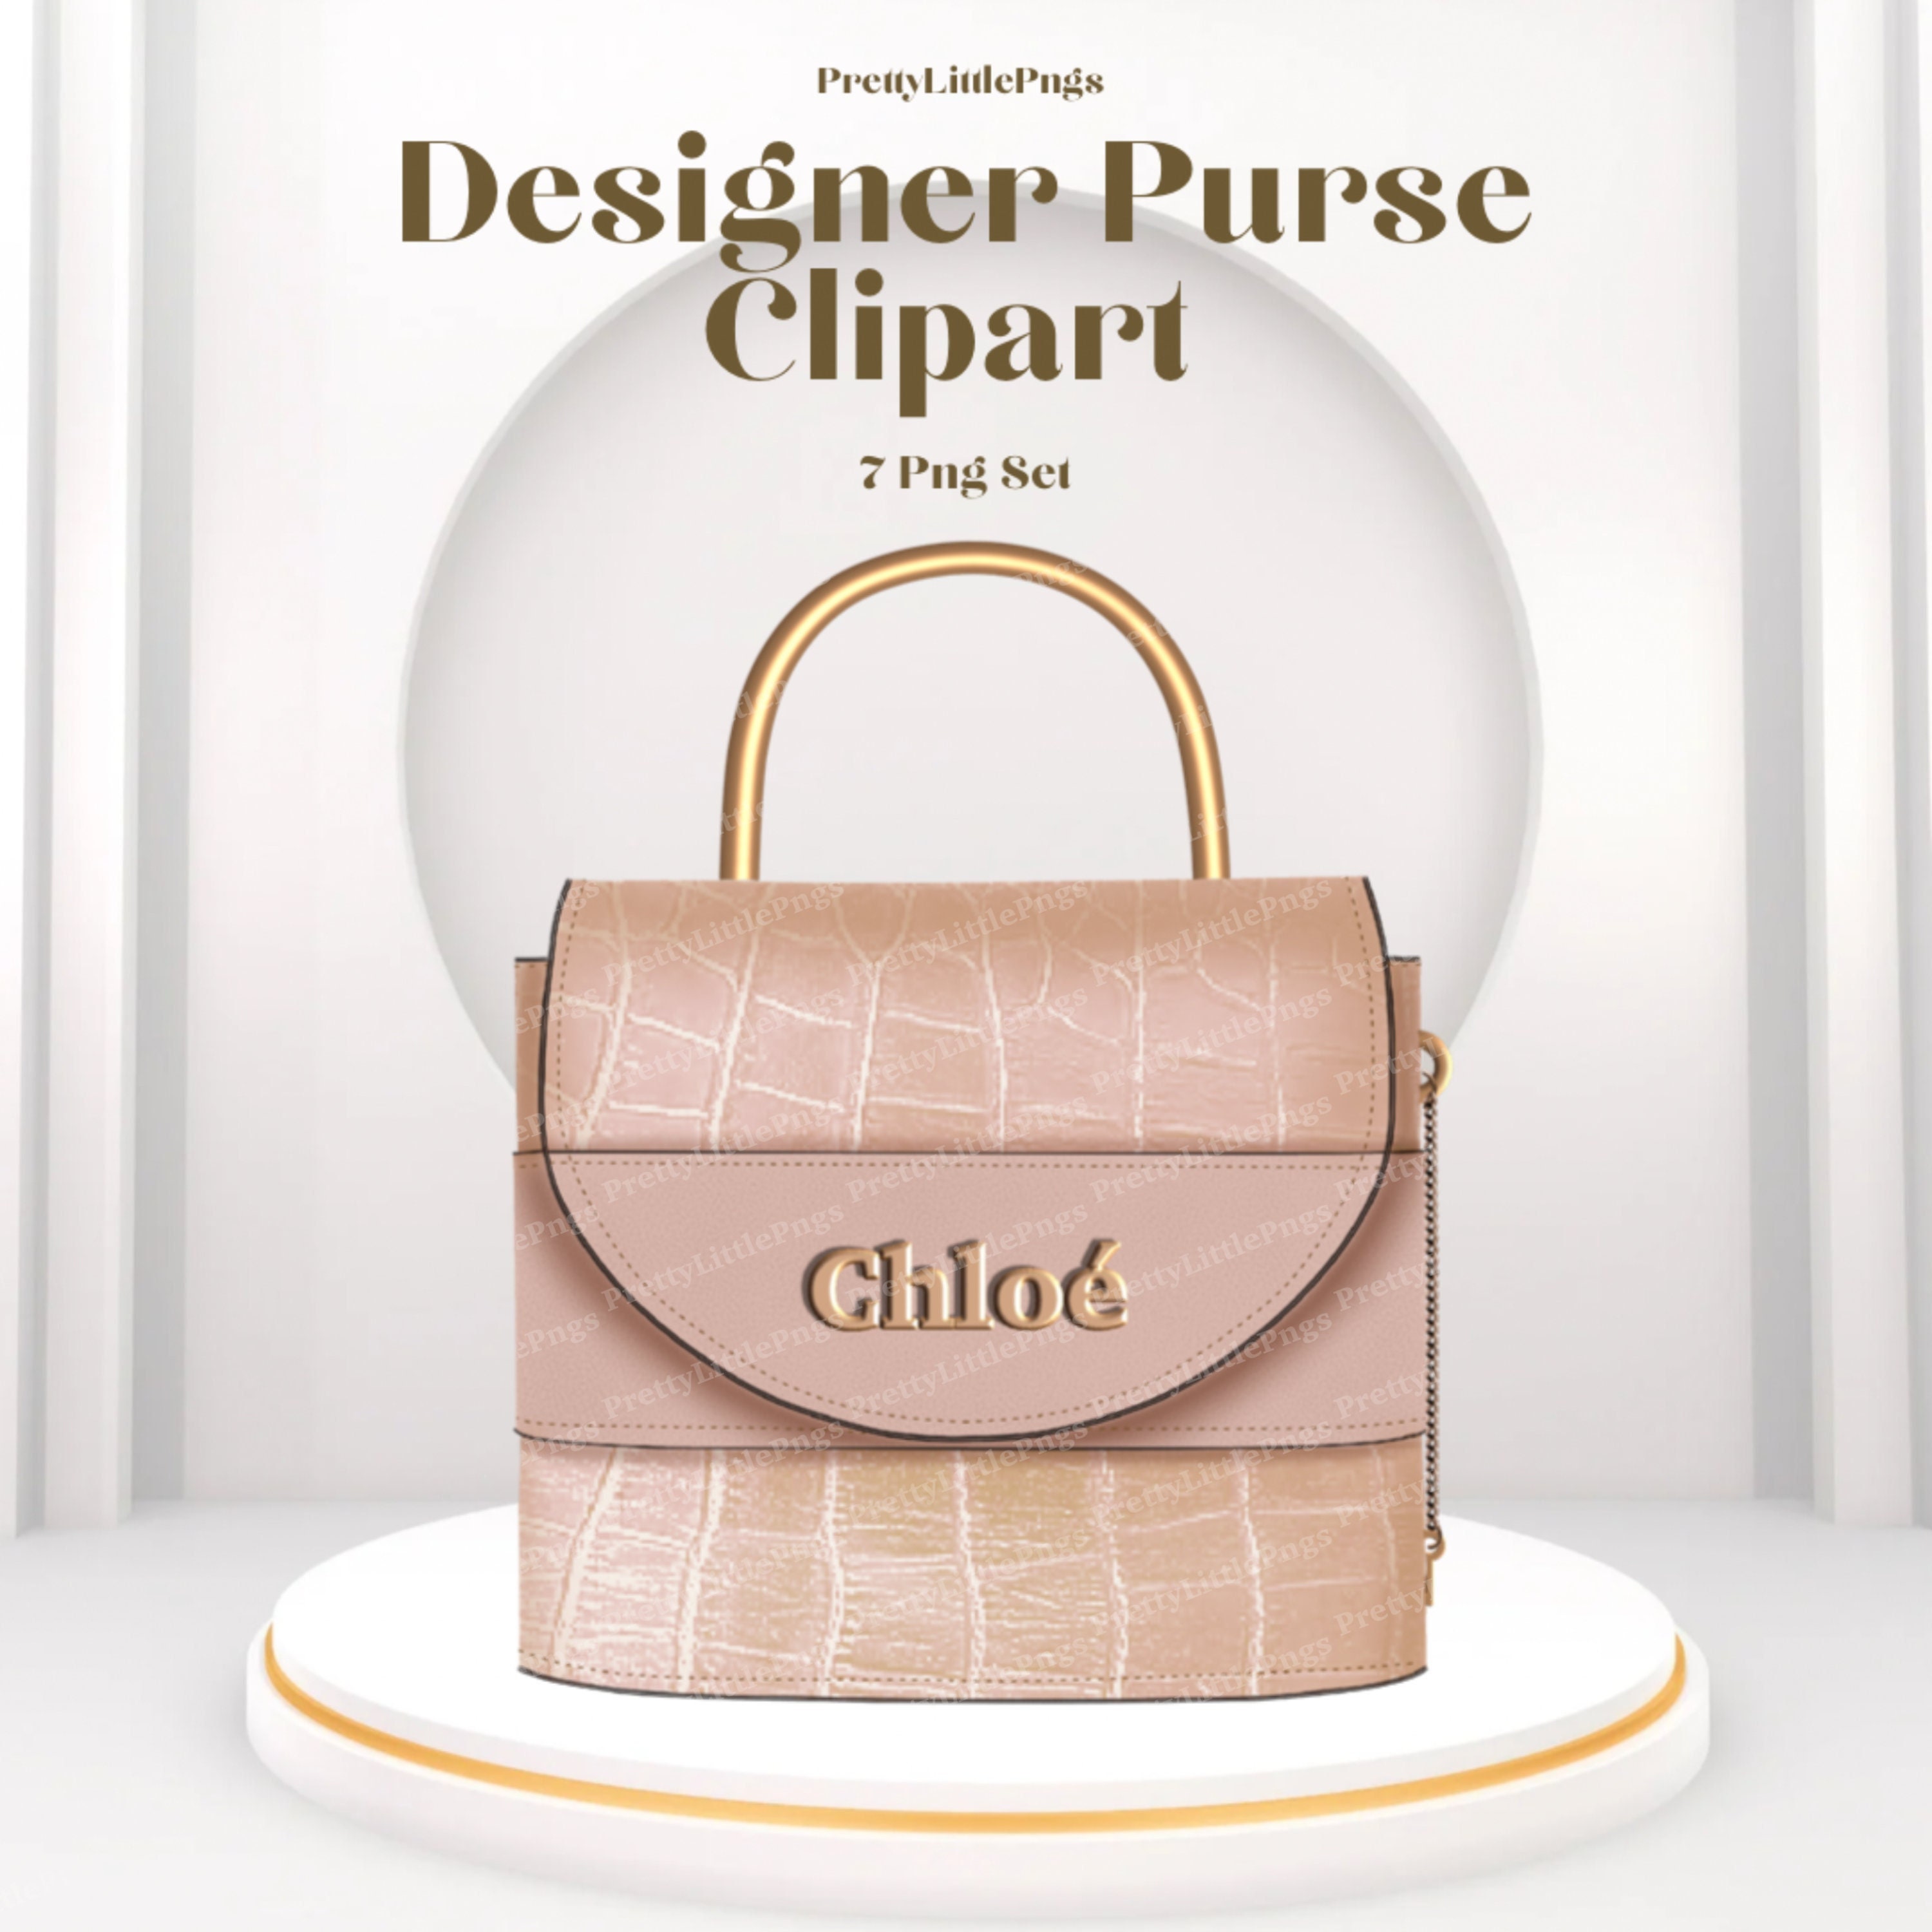 Designer Handbags Clipart Grafik Von Adithye's · Creative Fabrica